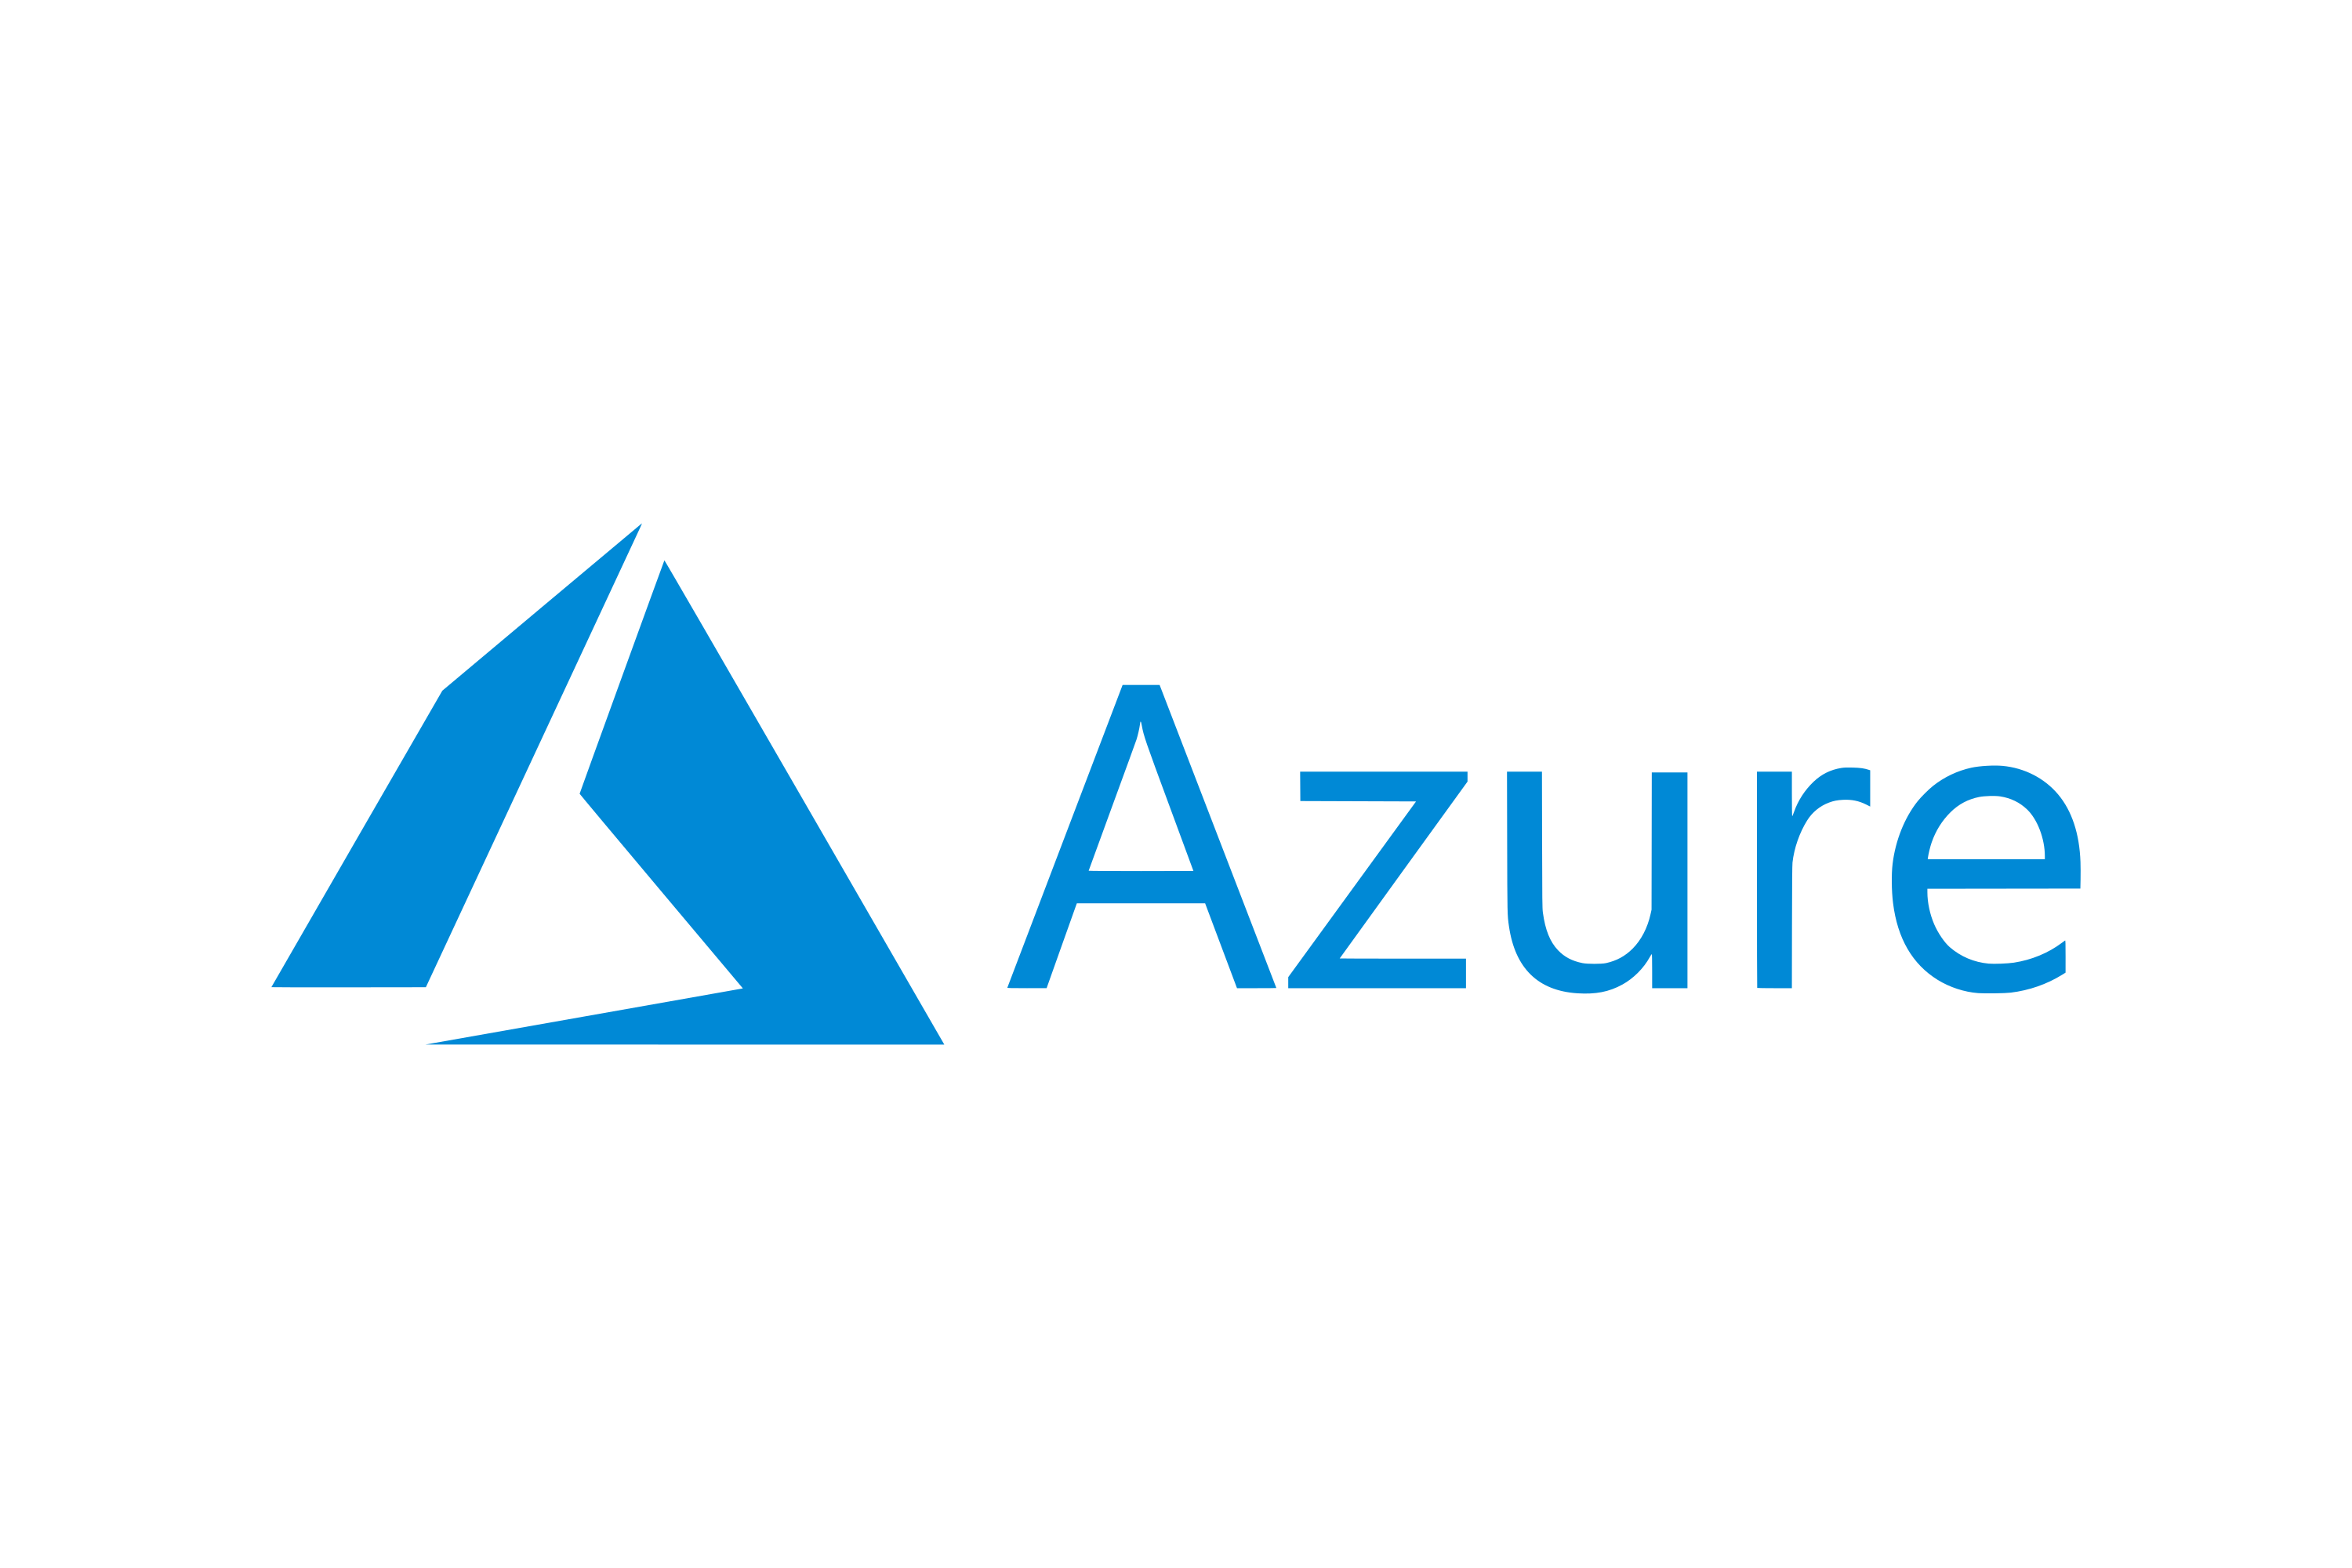 Azure logo